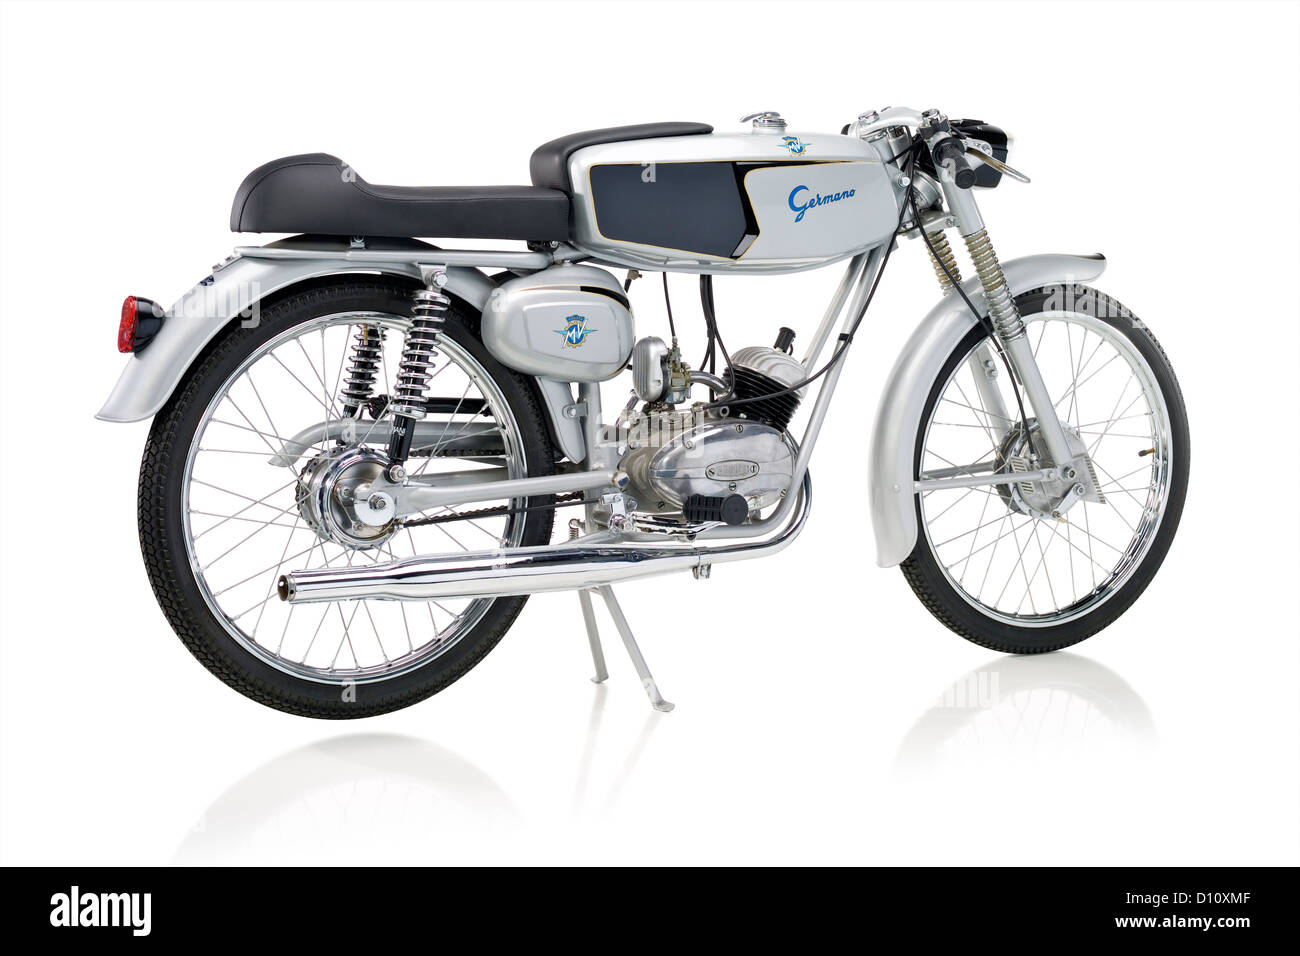 1966 MV Agusta Germano Sport motorcycle Stock Photo